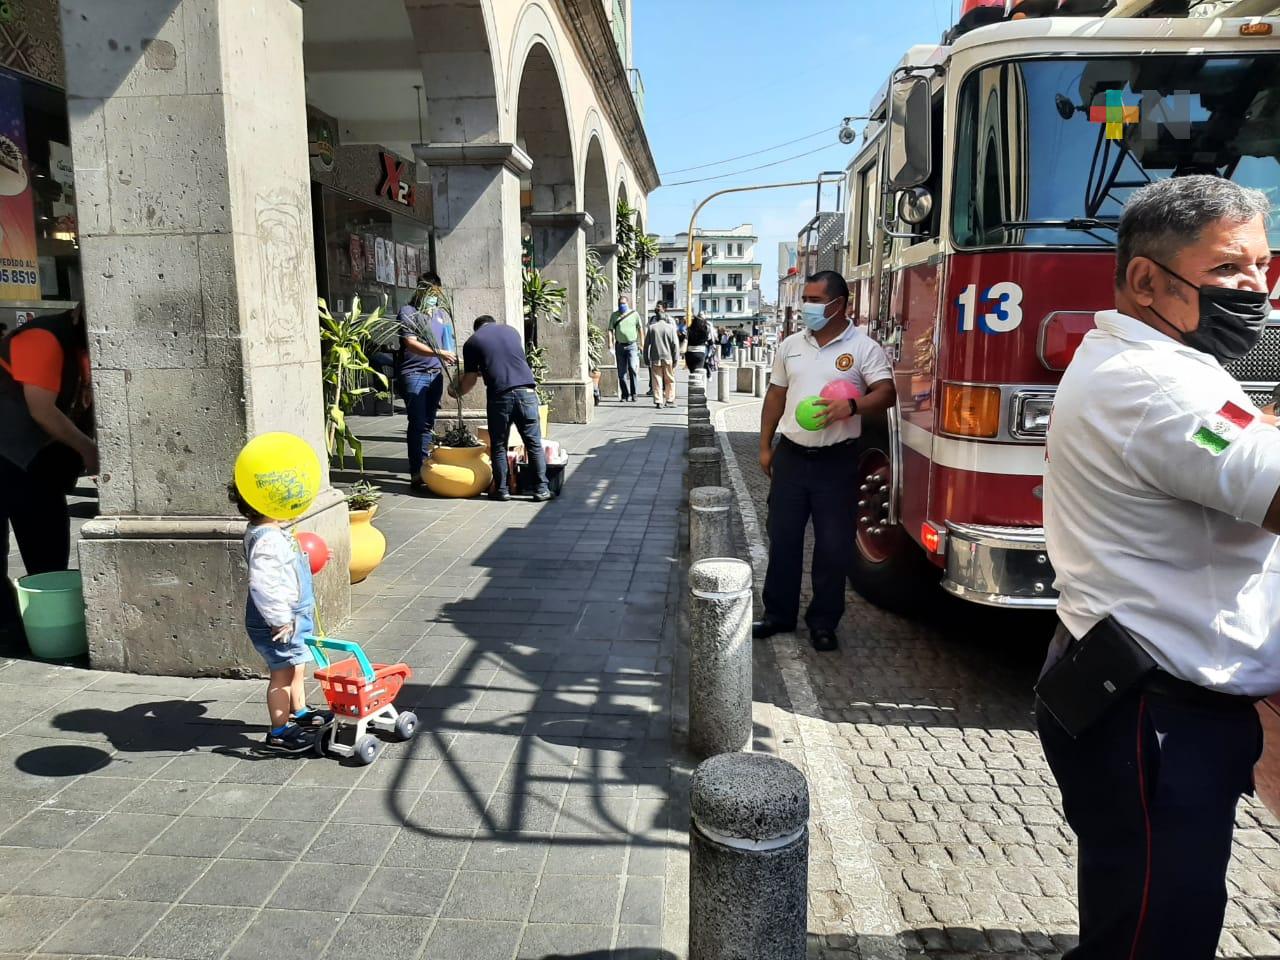 En calles de Xalapa, bomberos regalan pelotas y dulces a niños